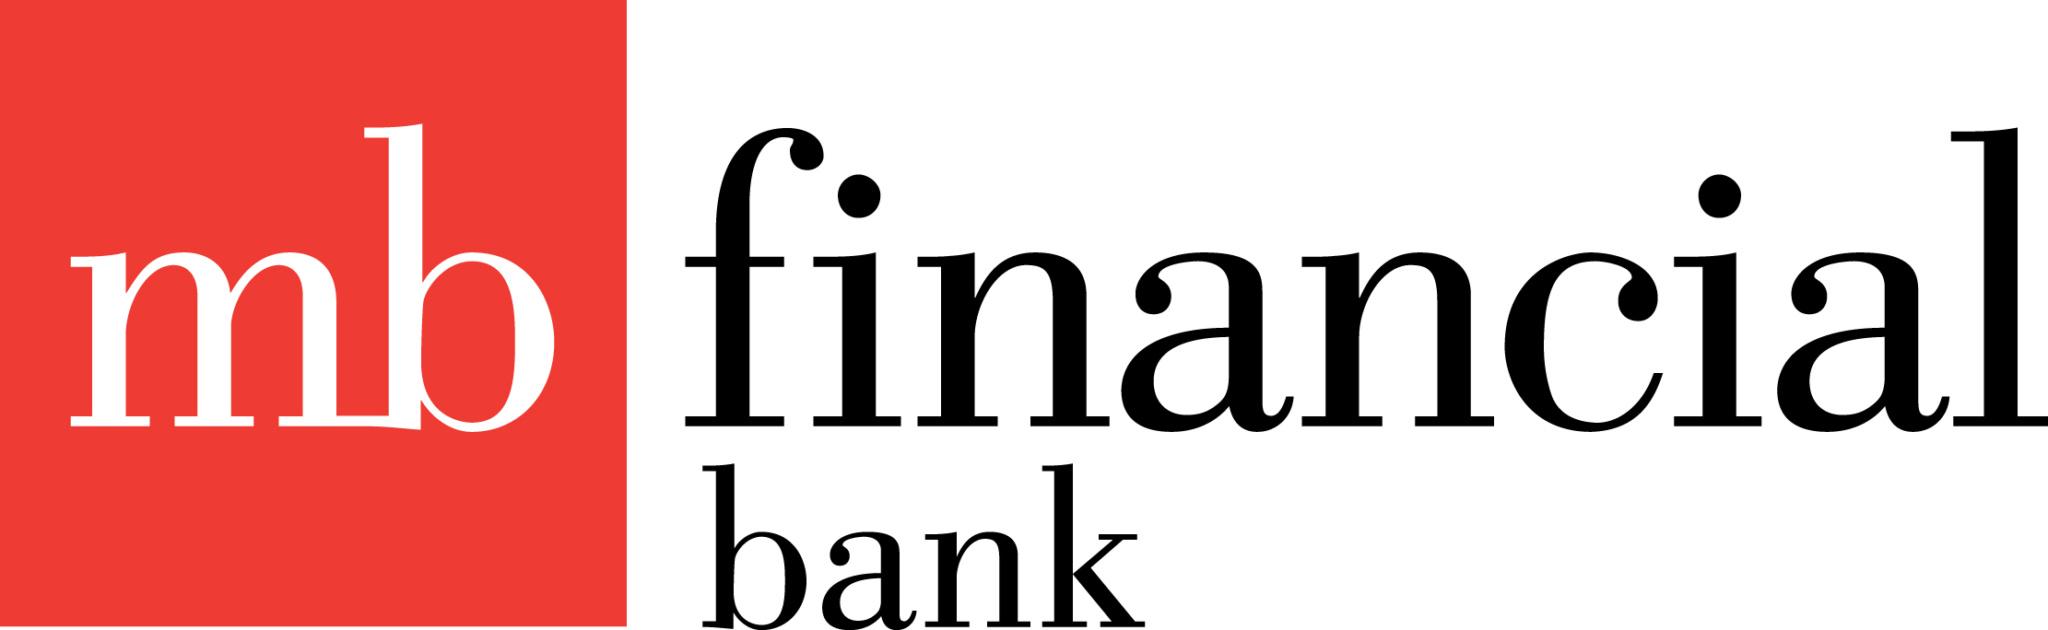 MB Financial Logo - RTM Engineering Consultants. Mb Financial Inc Logo